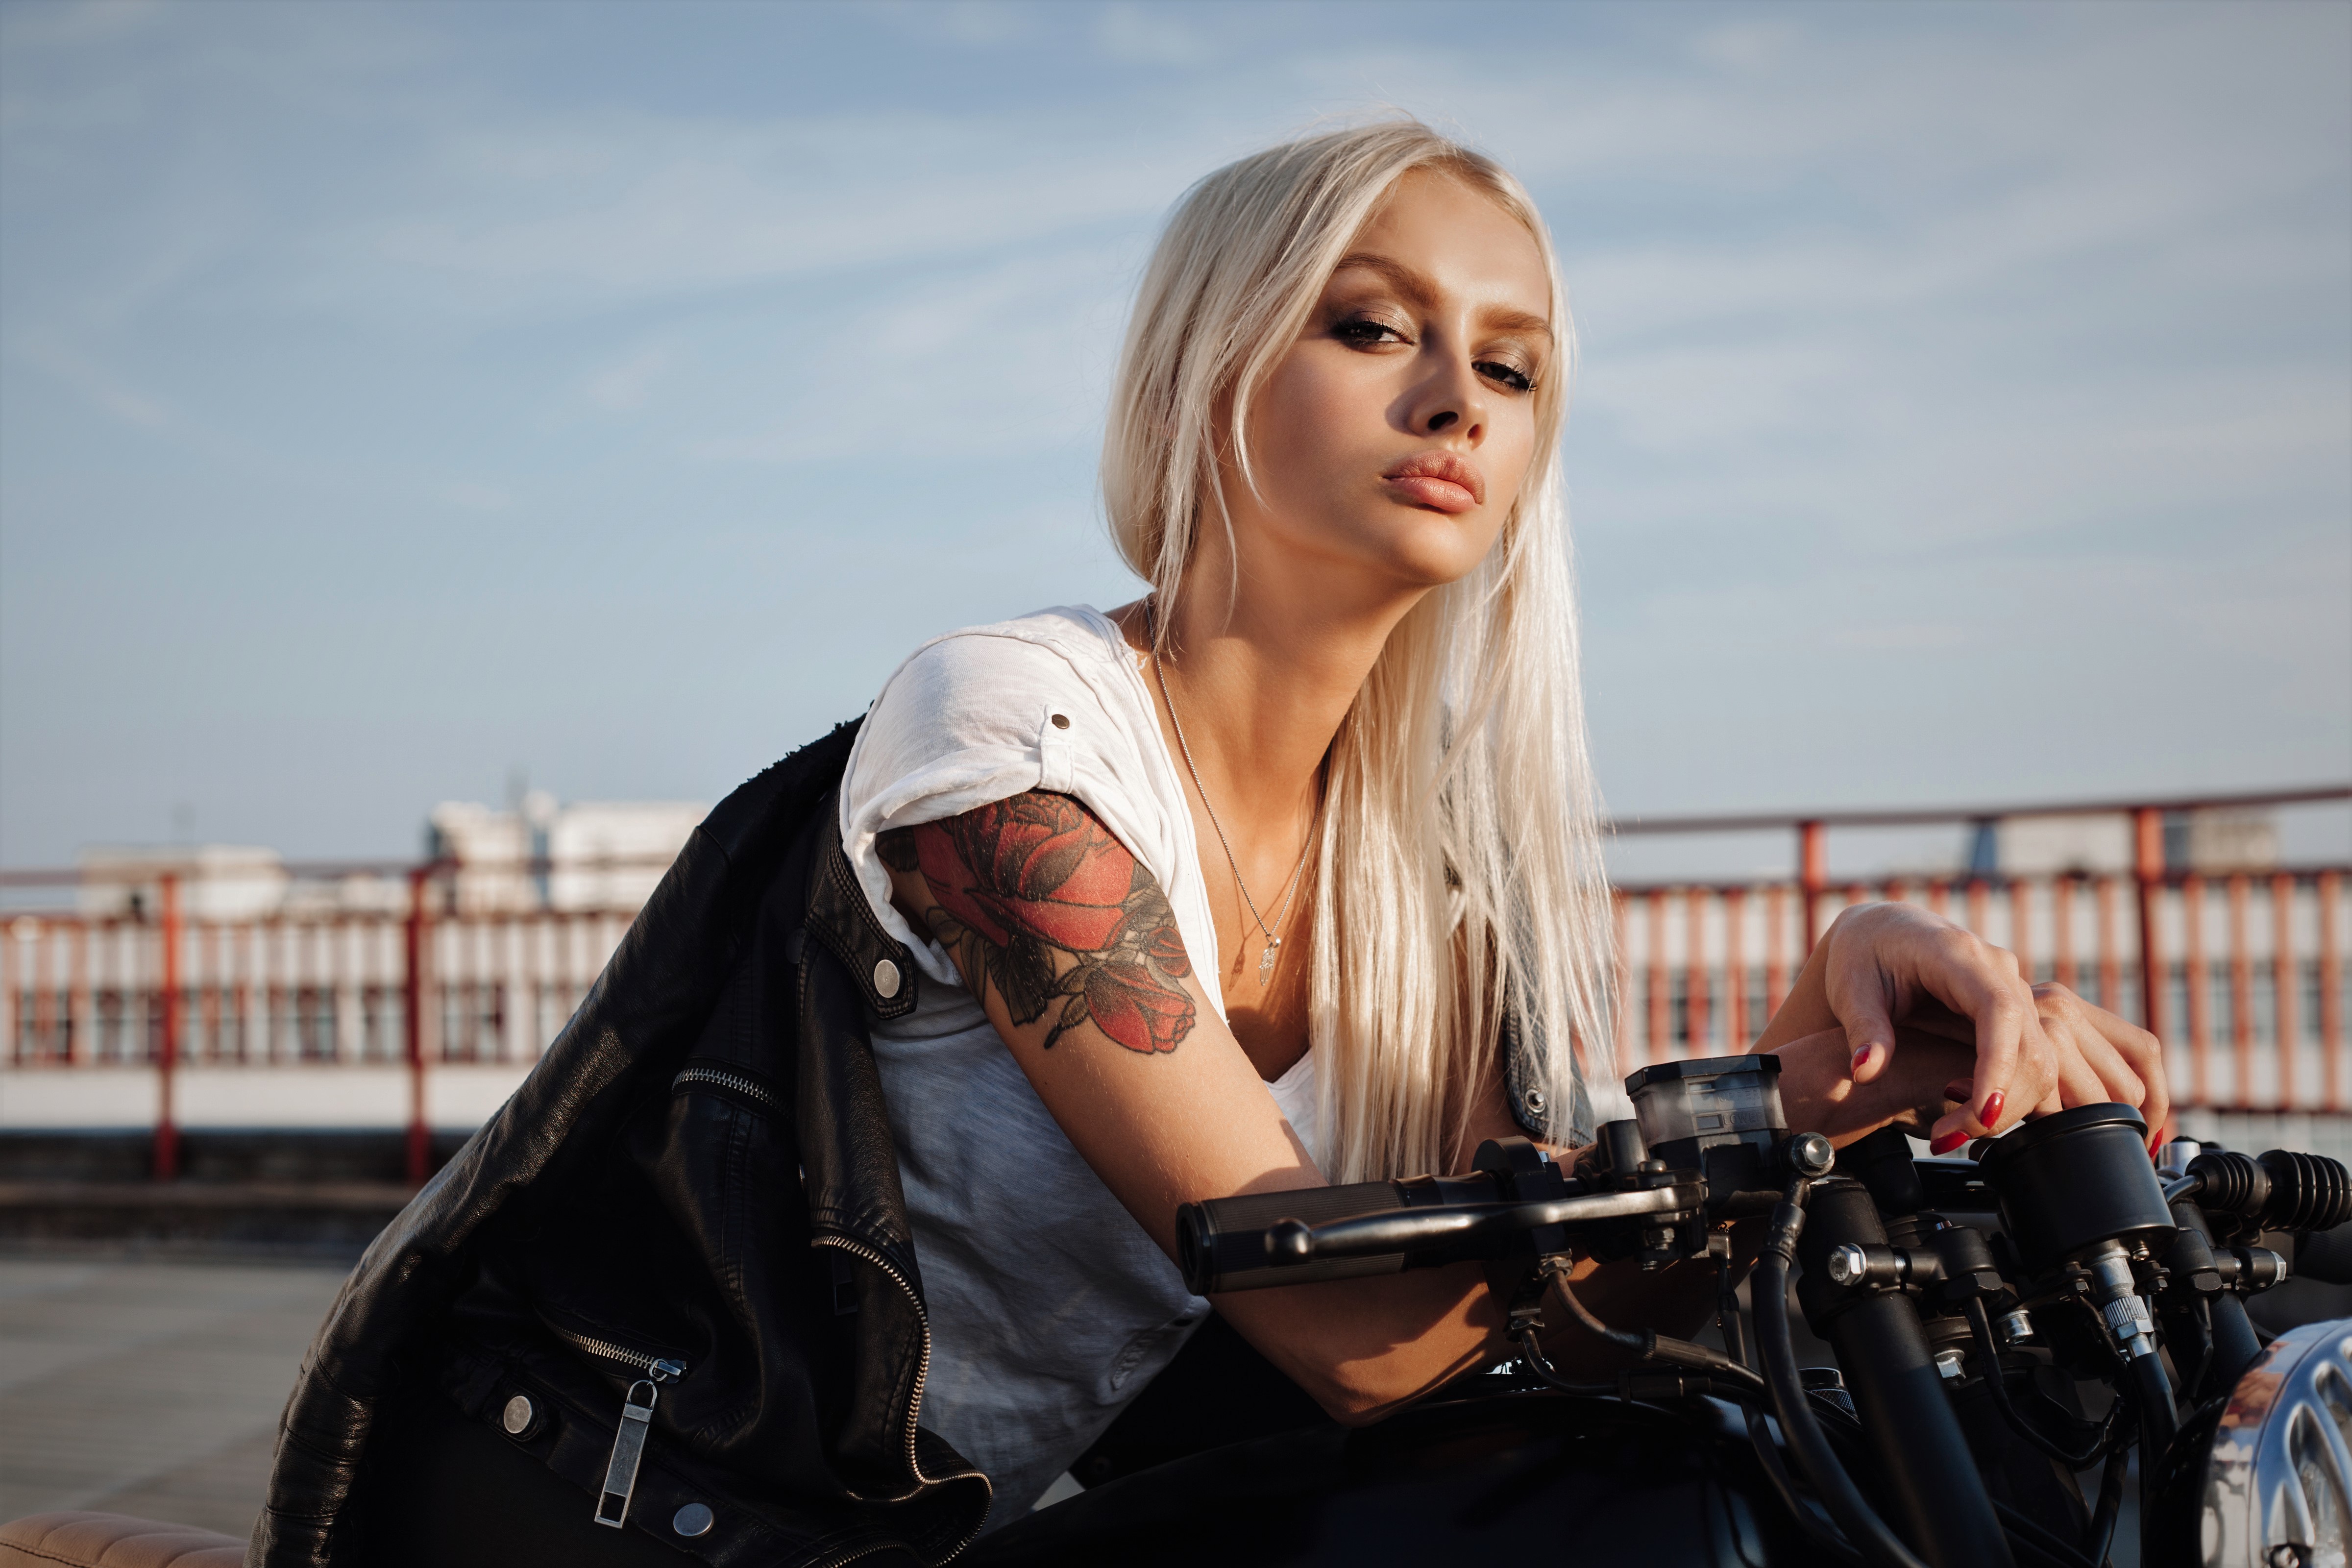 Woman Girl Motorcycle Blonde Long Hair 4800x3200